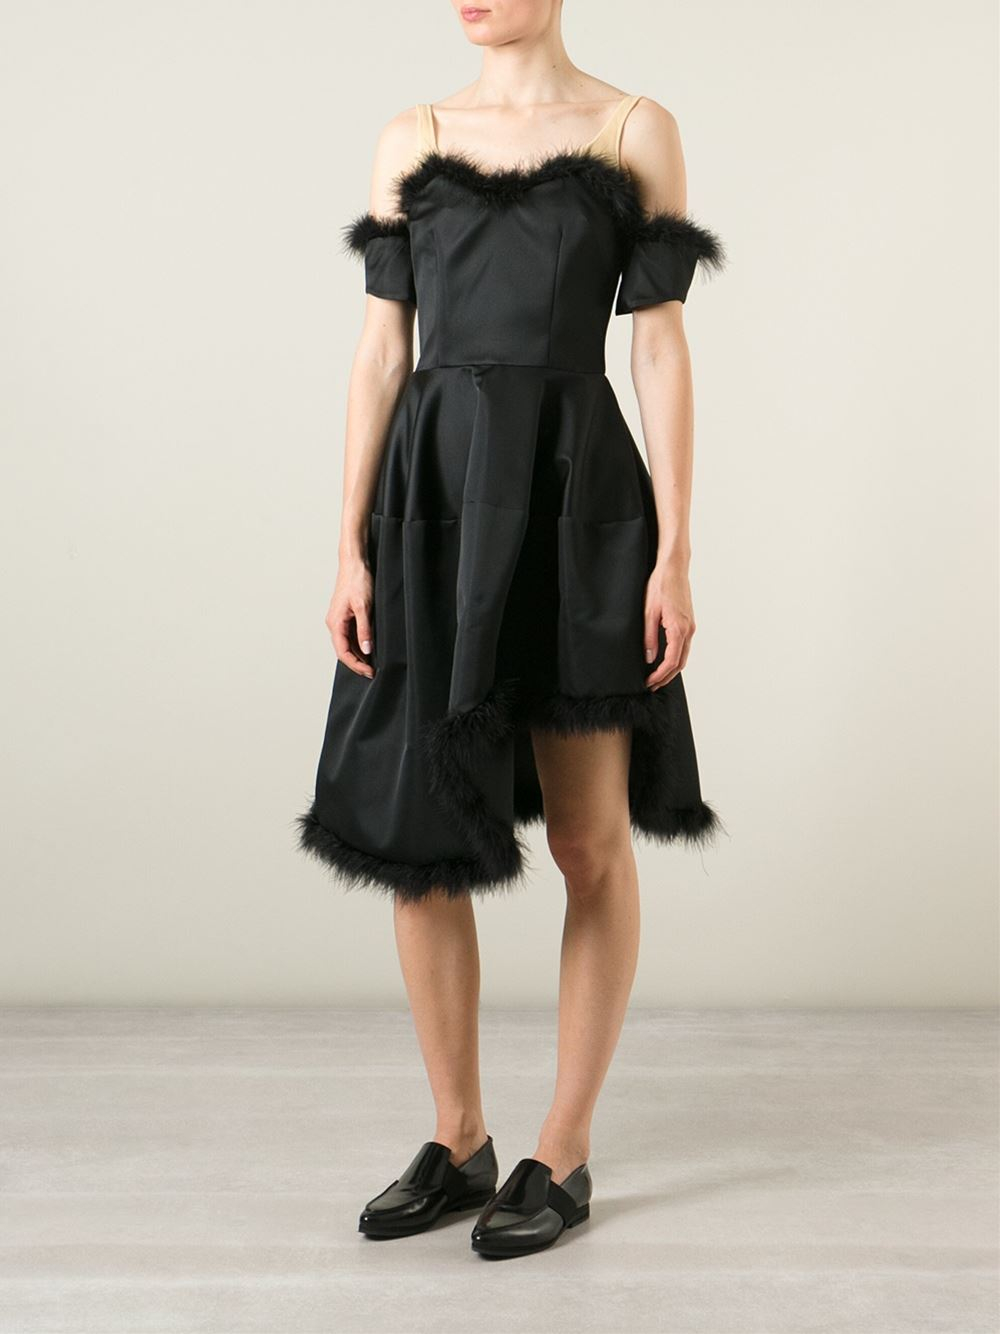 Lyst - Simone Rocha Marabou Feather Trimmed Dress in Black